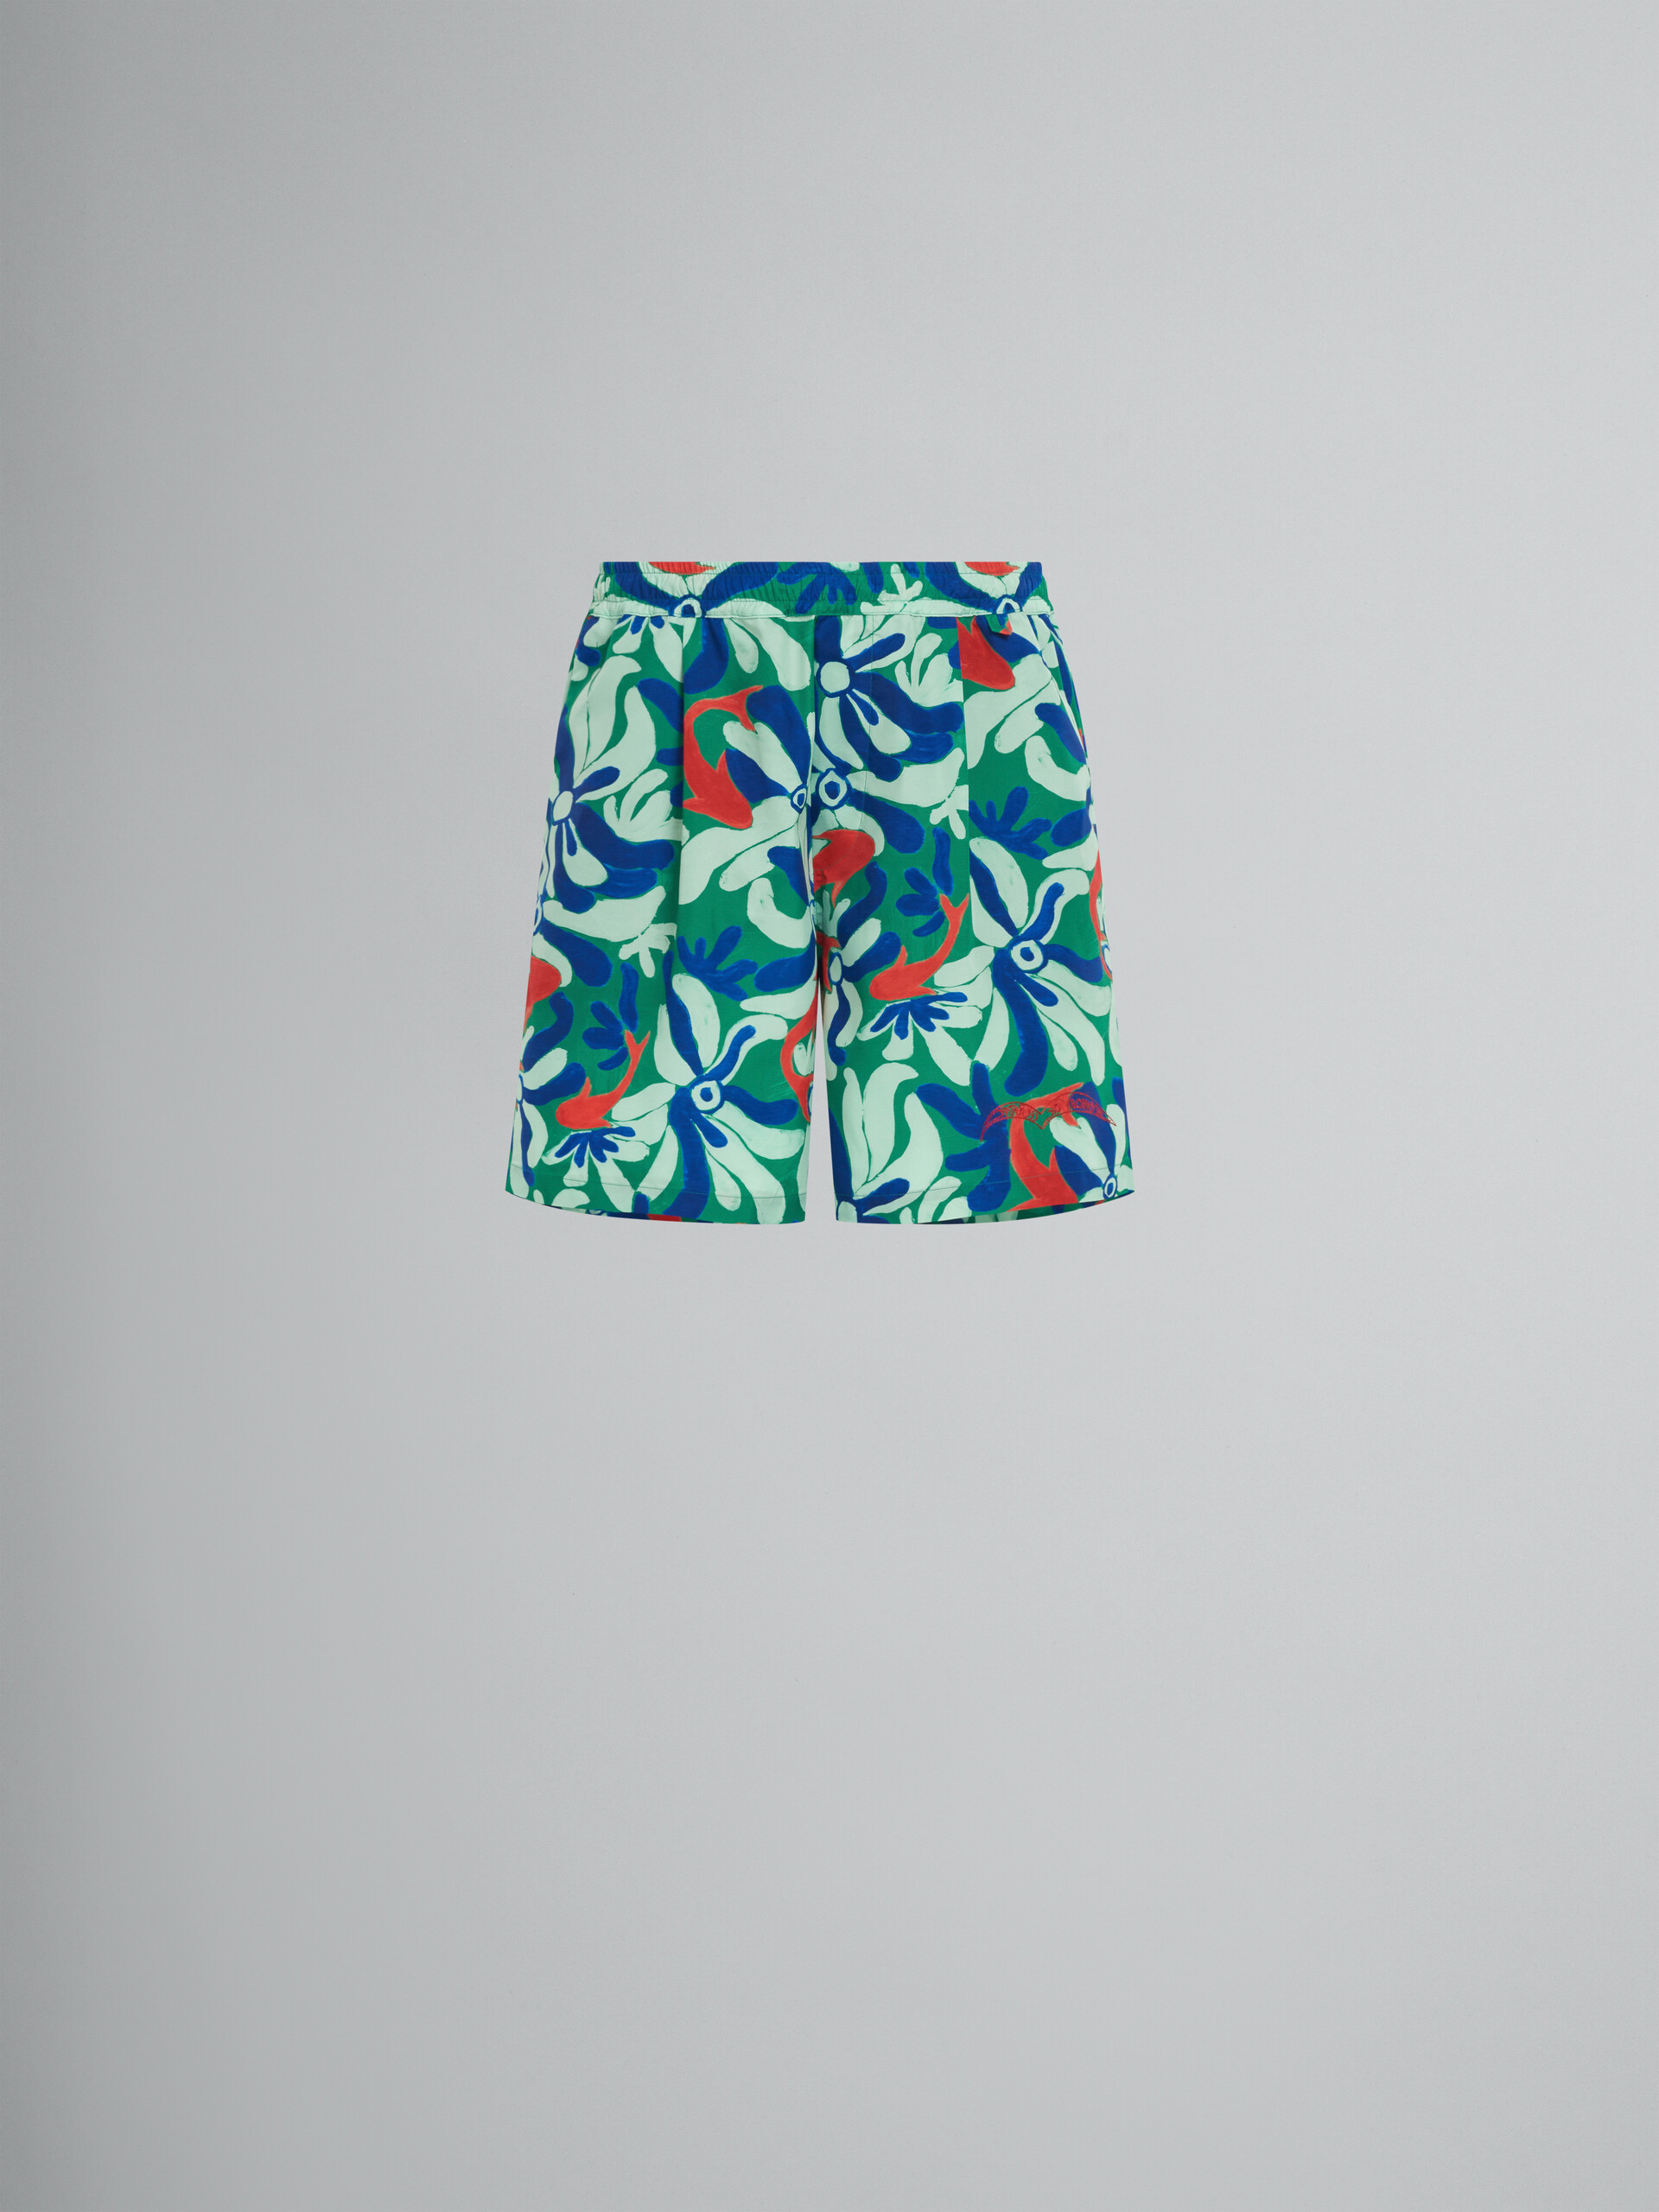 Marni x No Vacancy Inn - Nylon swim shorts with Chippy Fishes print - Swimwear - Image 1